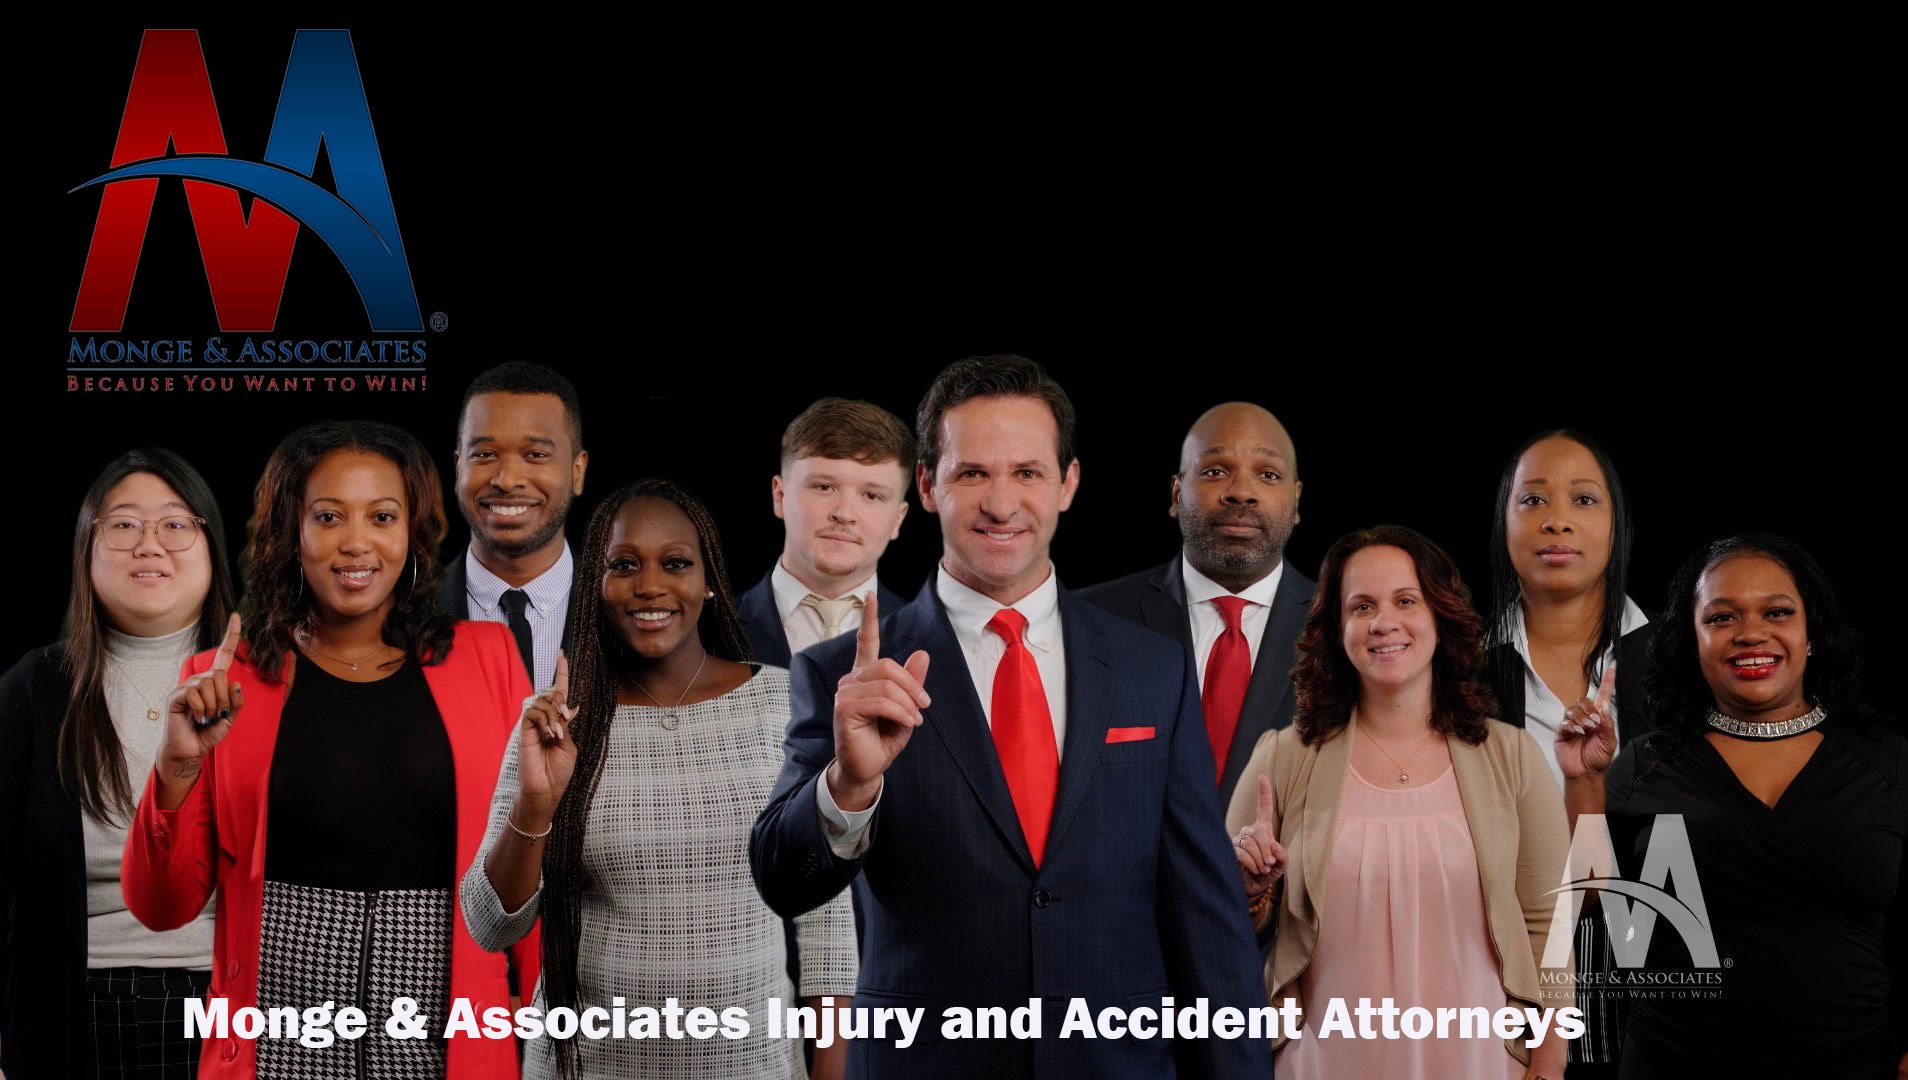 Monge & Associates Injury and Accident Attorneys - Salt Lake City (UT 84111), US, car crashes